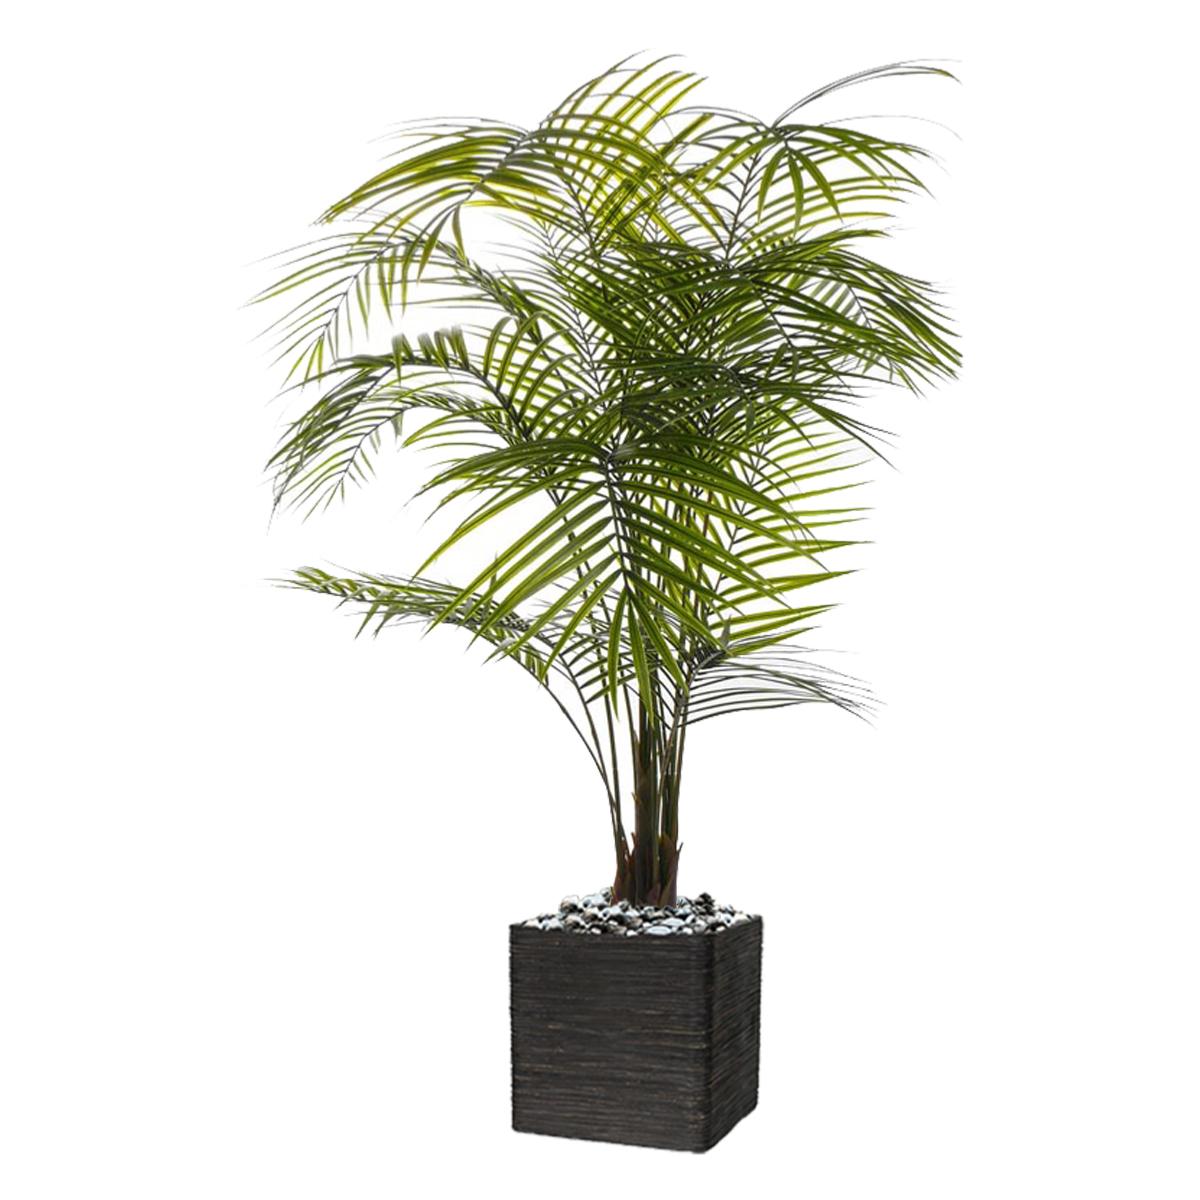 Palmier Areca artificiel en plastique anti-UV en pot